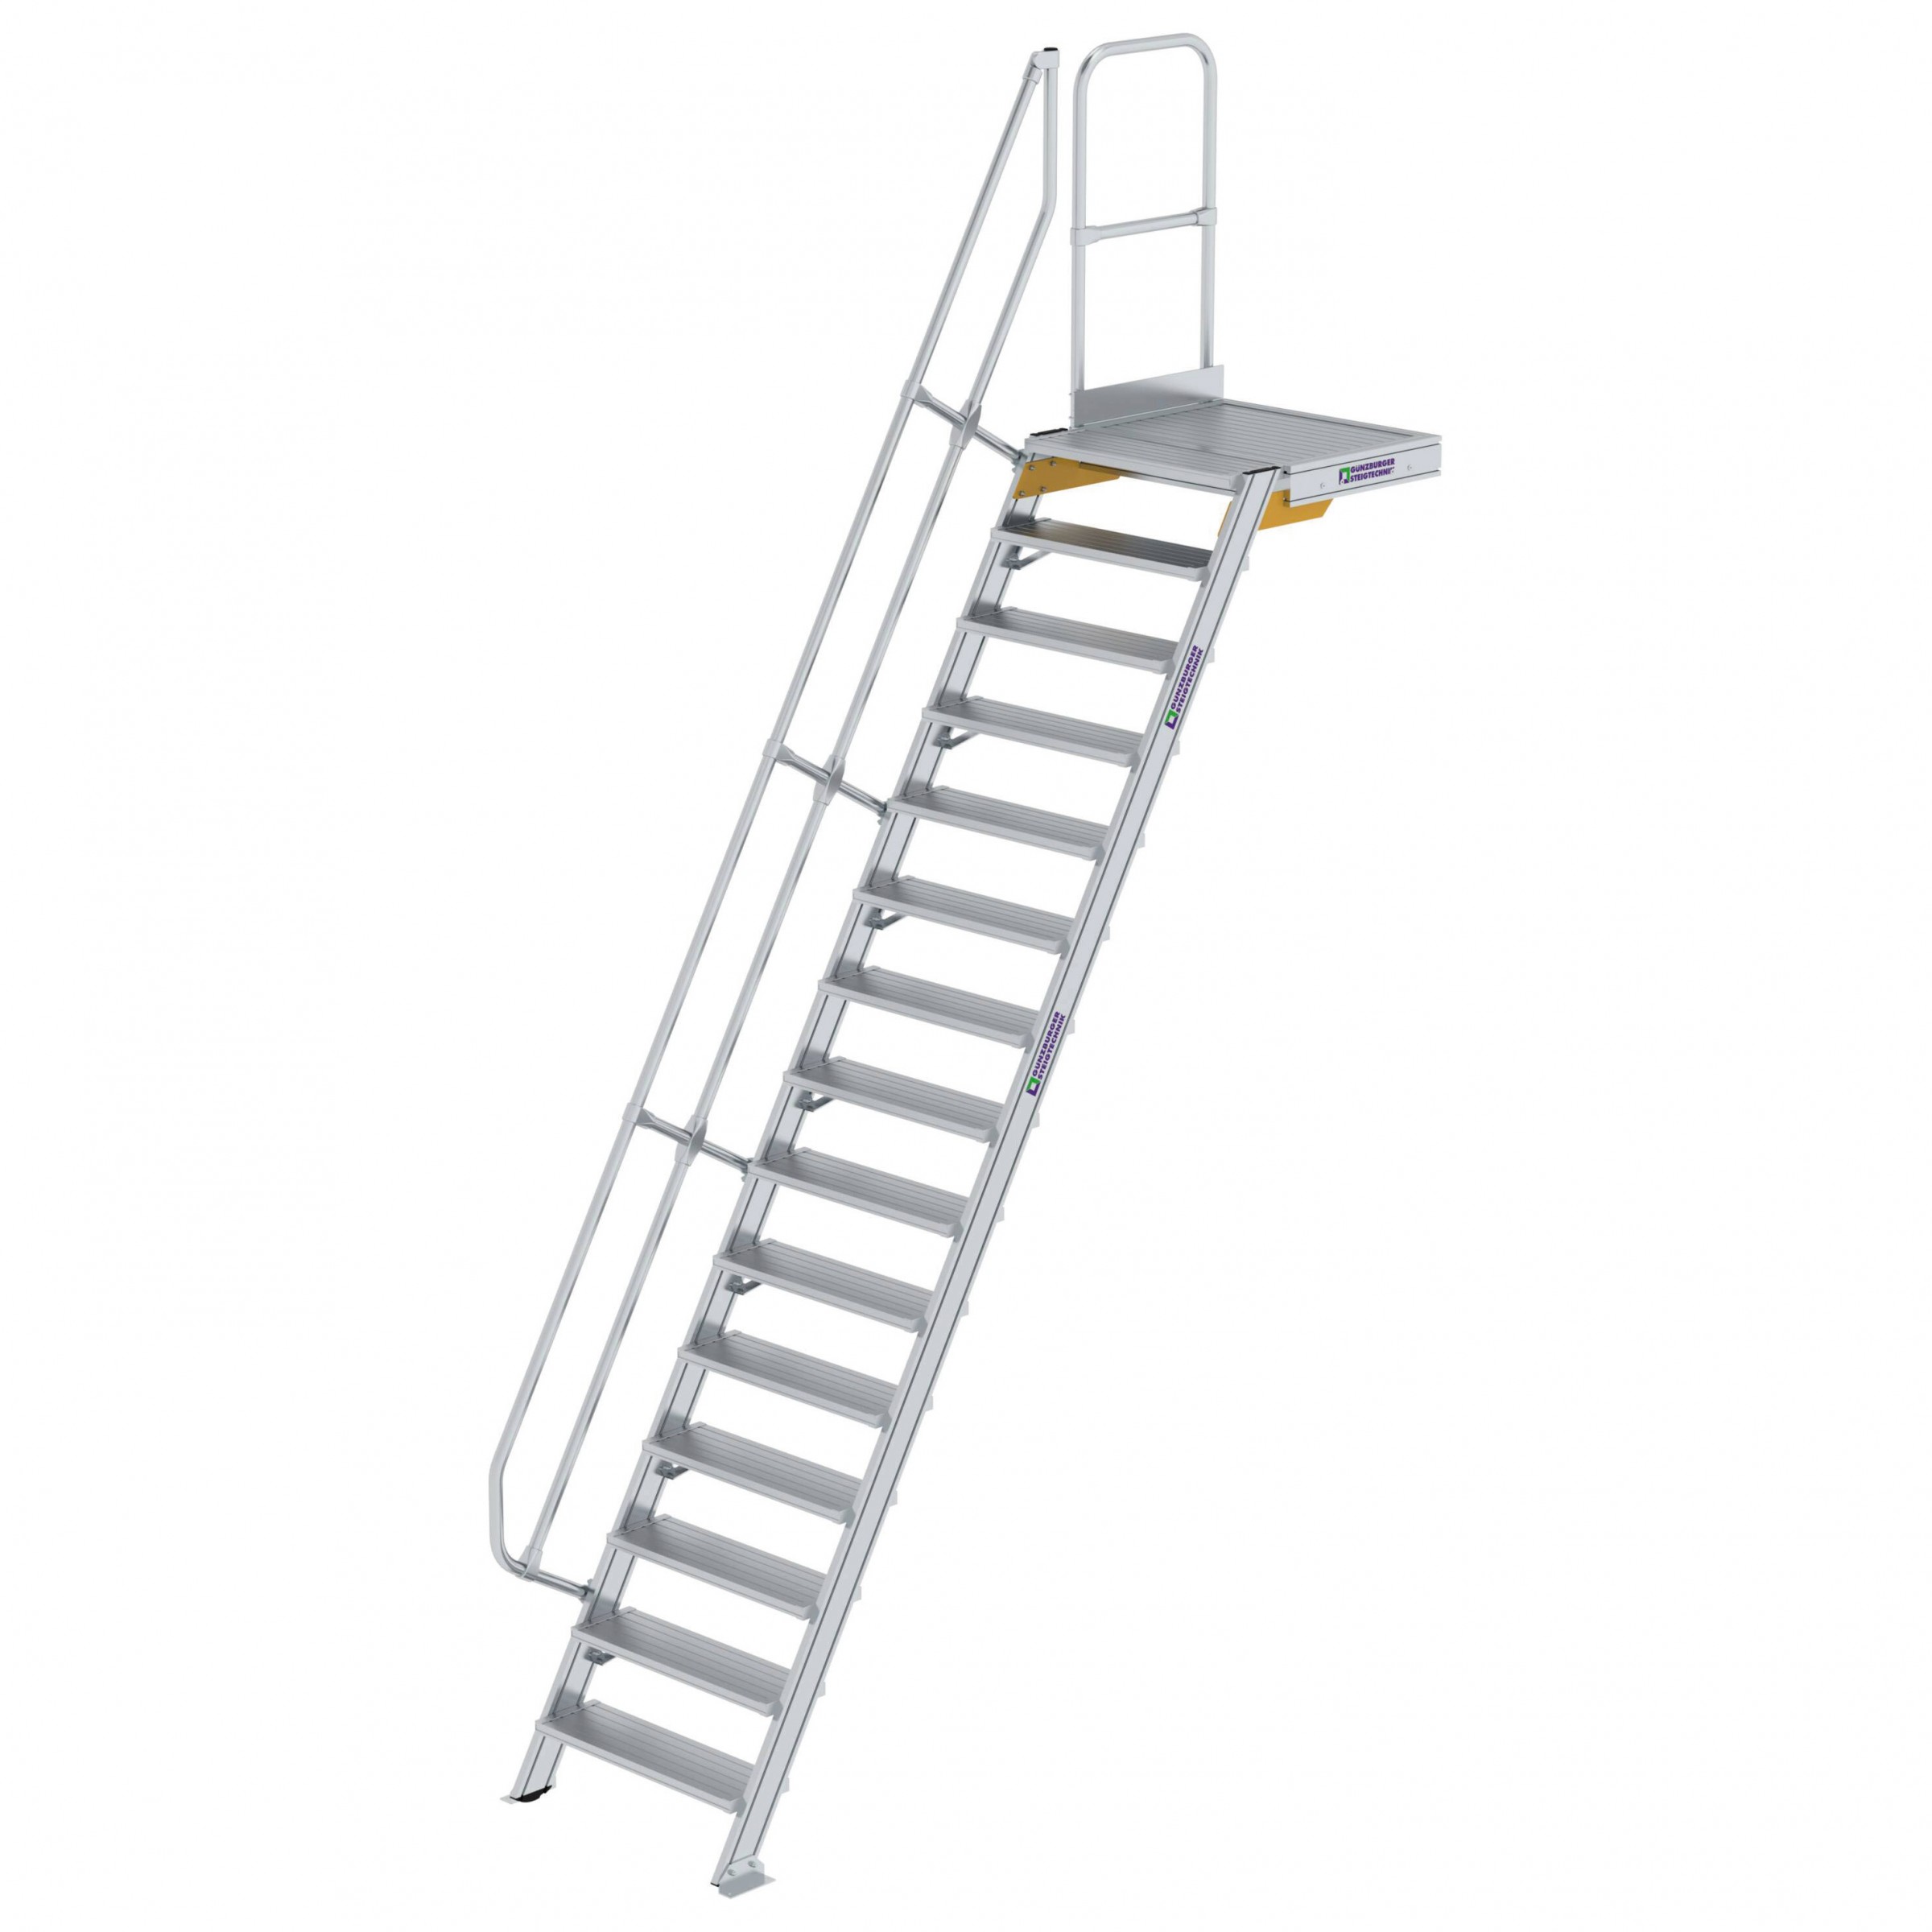 Aluminium-Treppe 60° mit Podest, Stufenbreite 800 mm, 4 Stufen